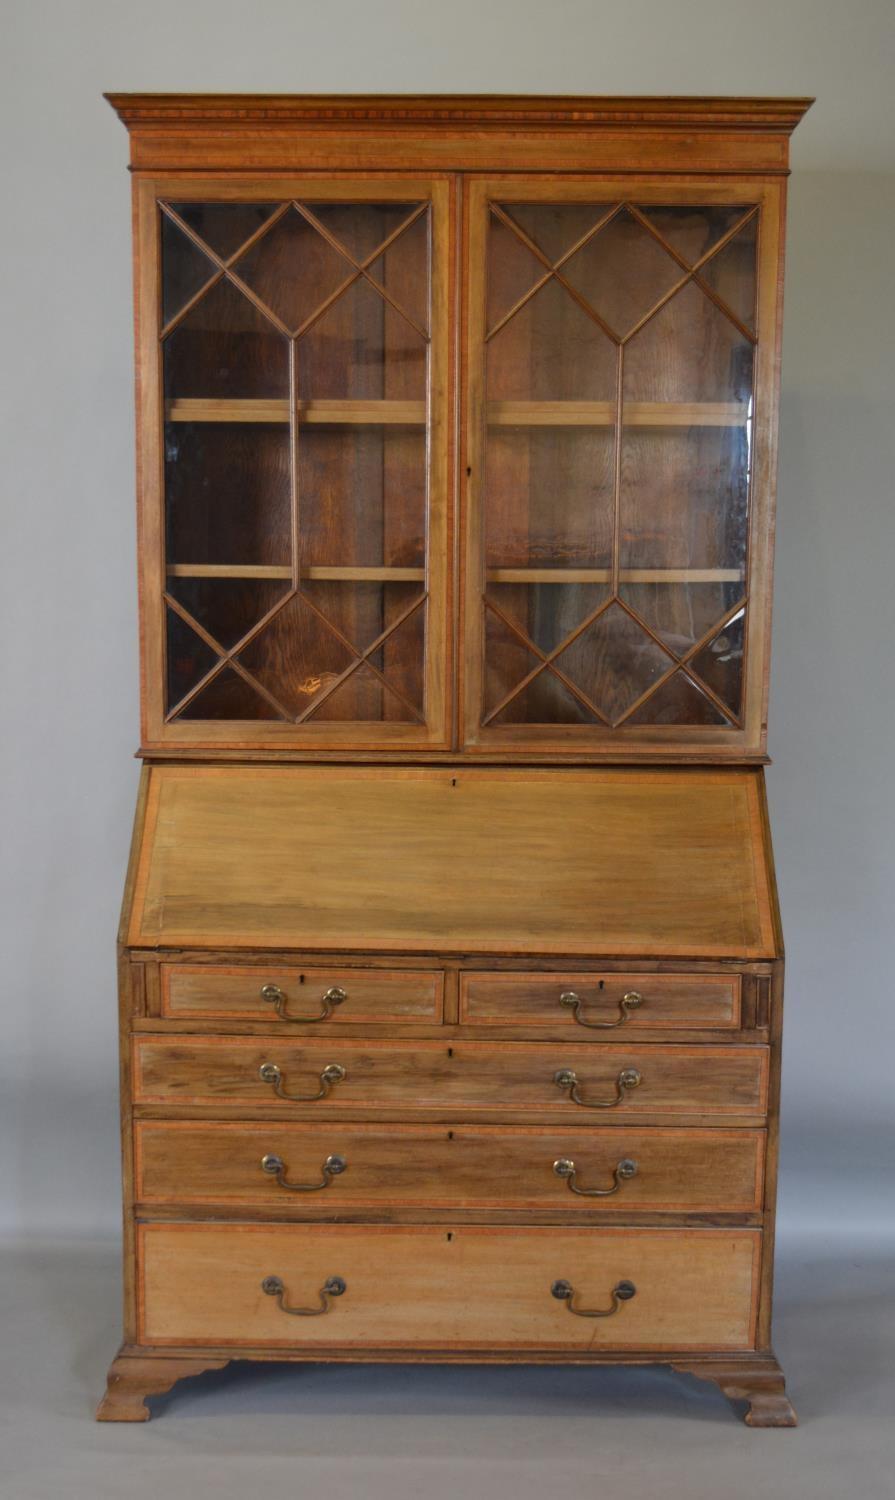 An Edwardian Mahogany Satinwood Inlaid Bureau Bookcase the moulded cornice above two astragal glazed